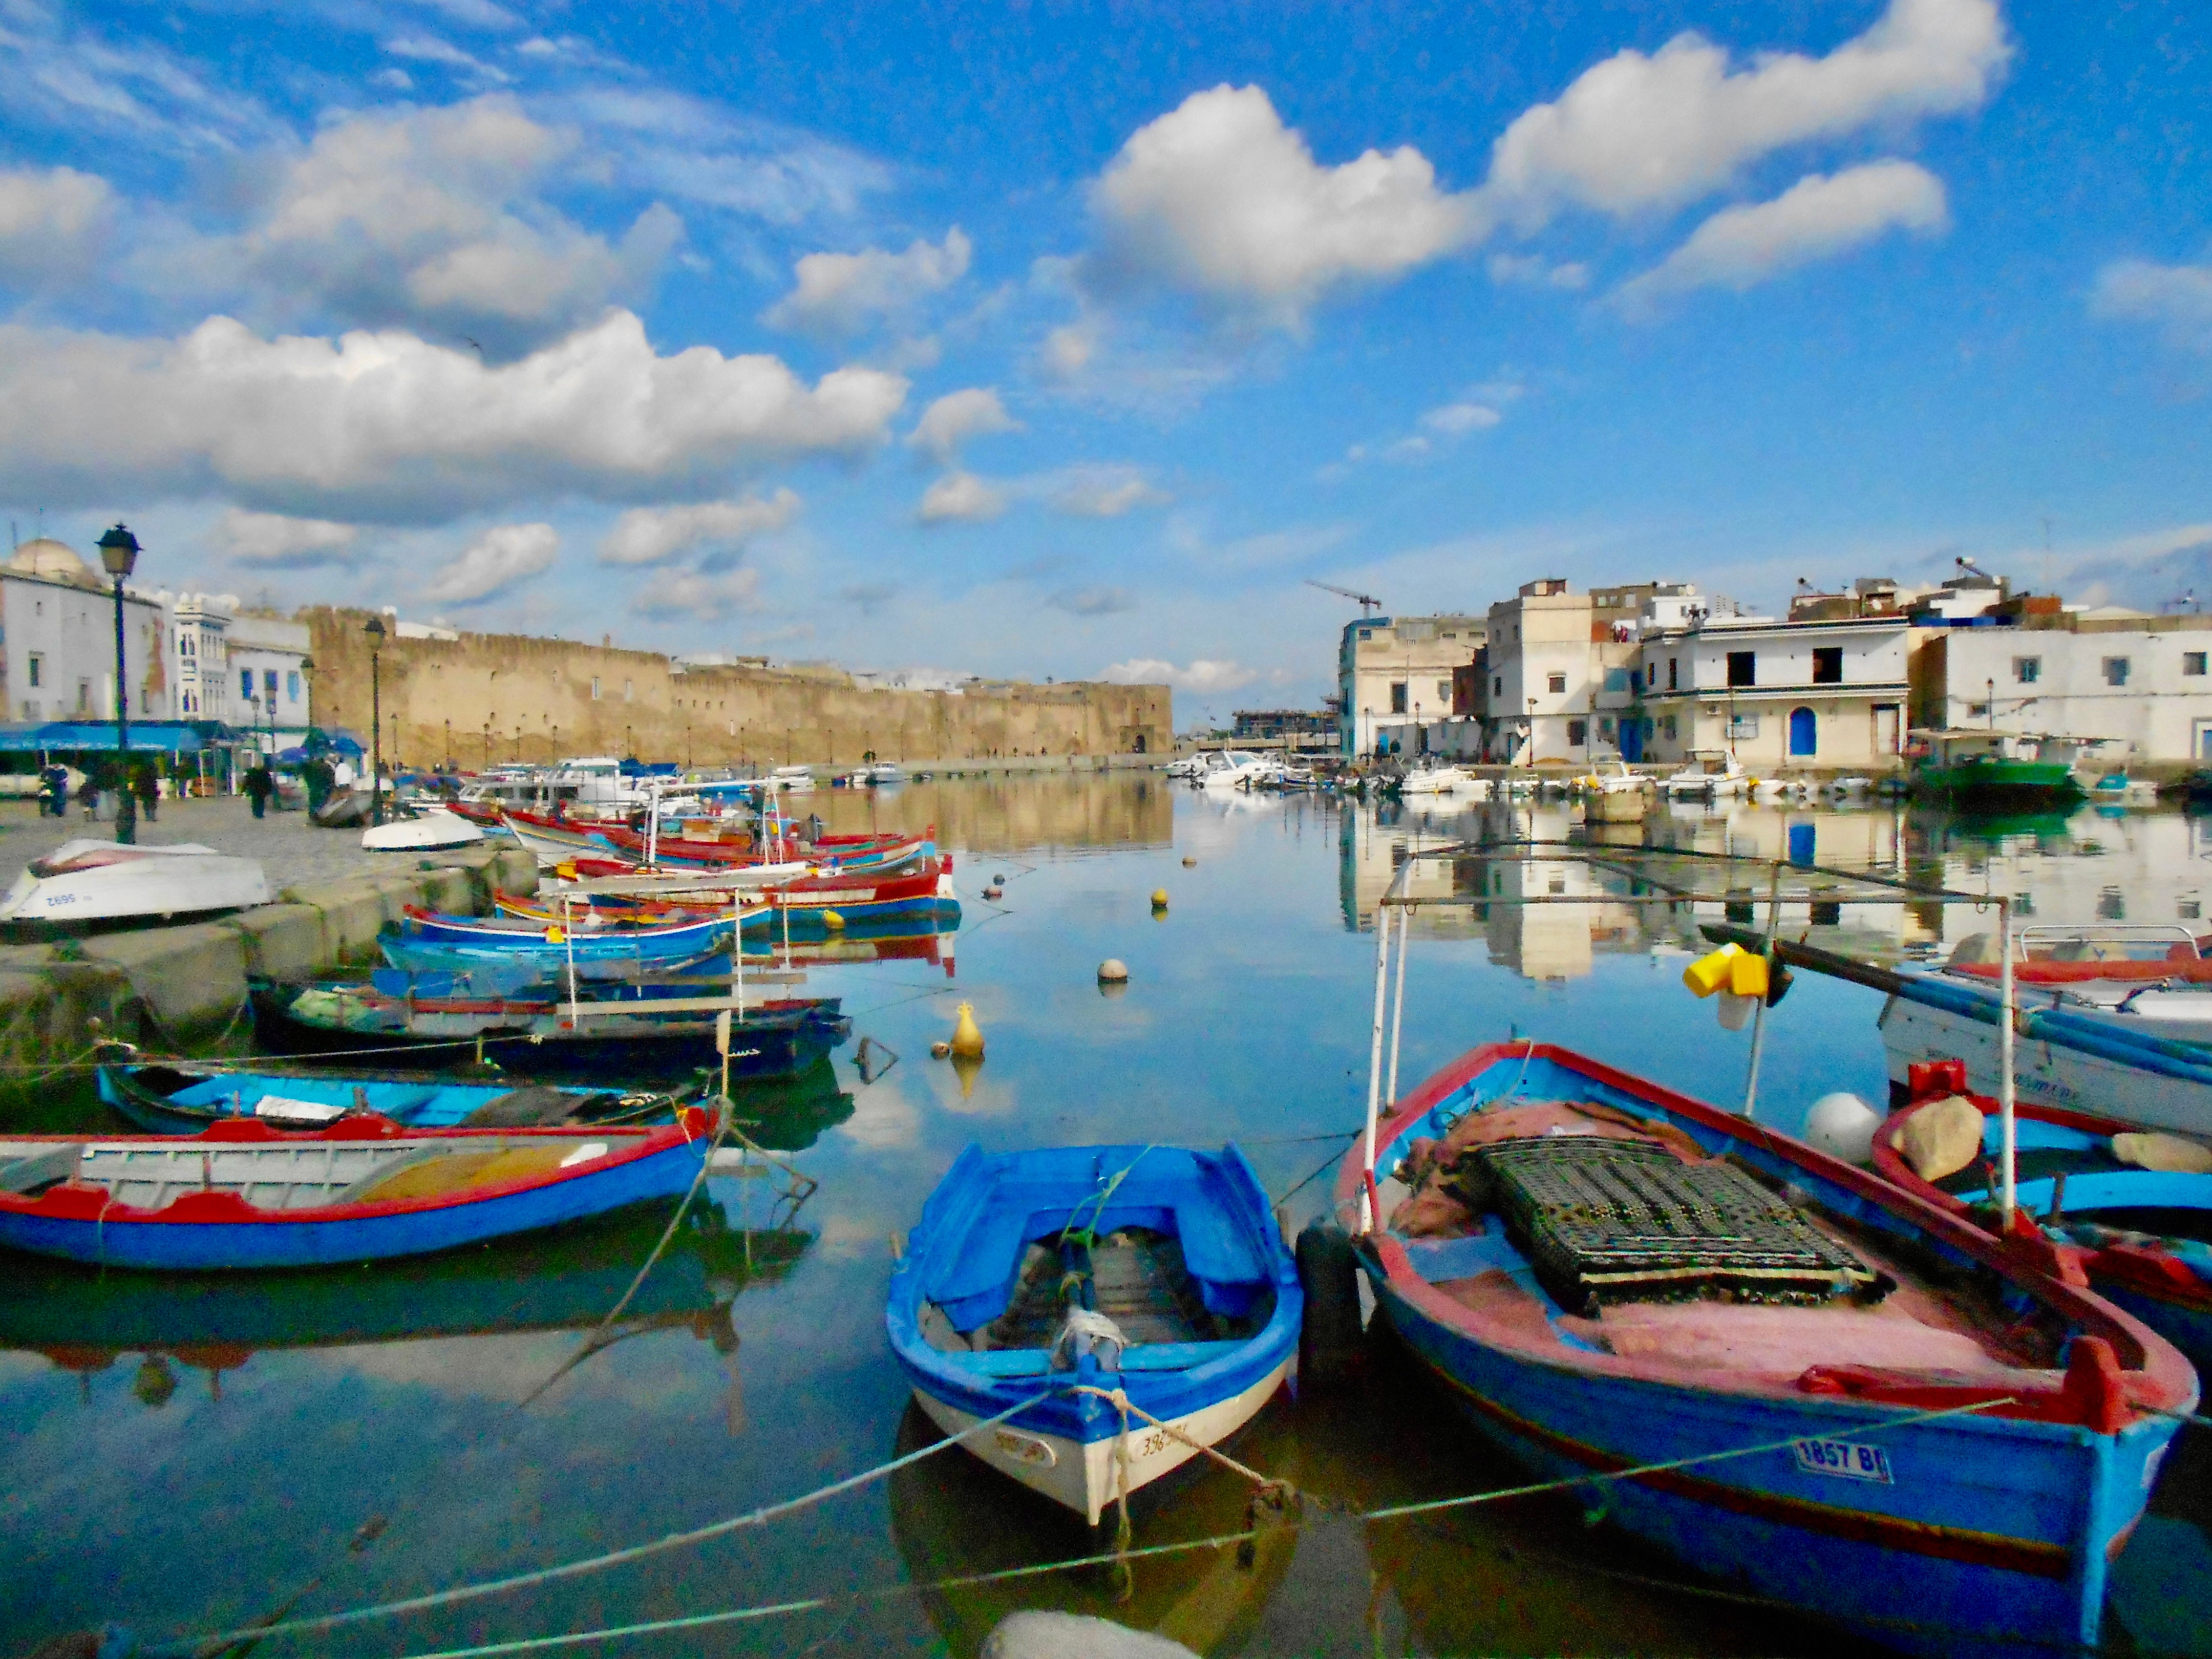 Blue-sky thinking: Midwinter day in Bizerte, Tunisia